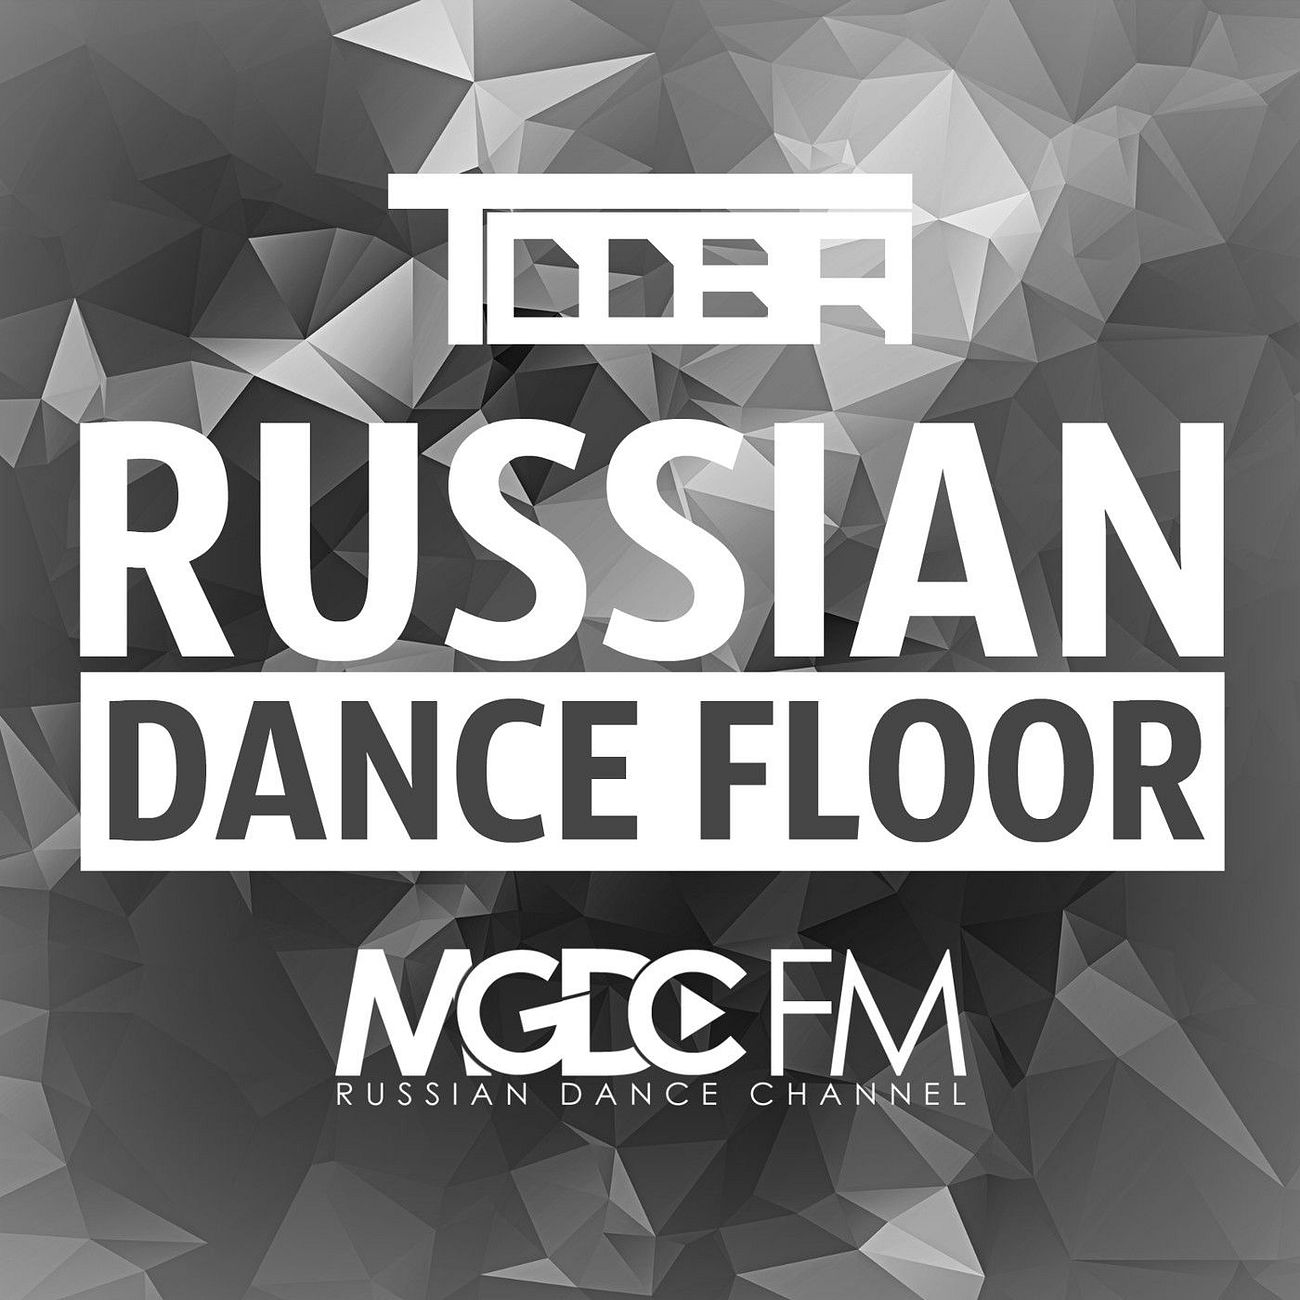 TDDBR – RUSSIAN DANCE FLOOR